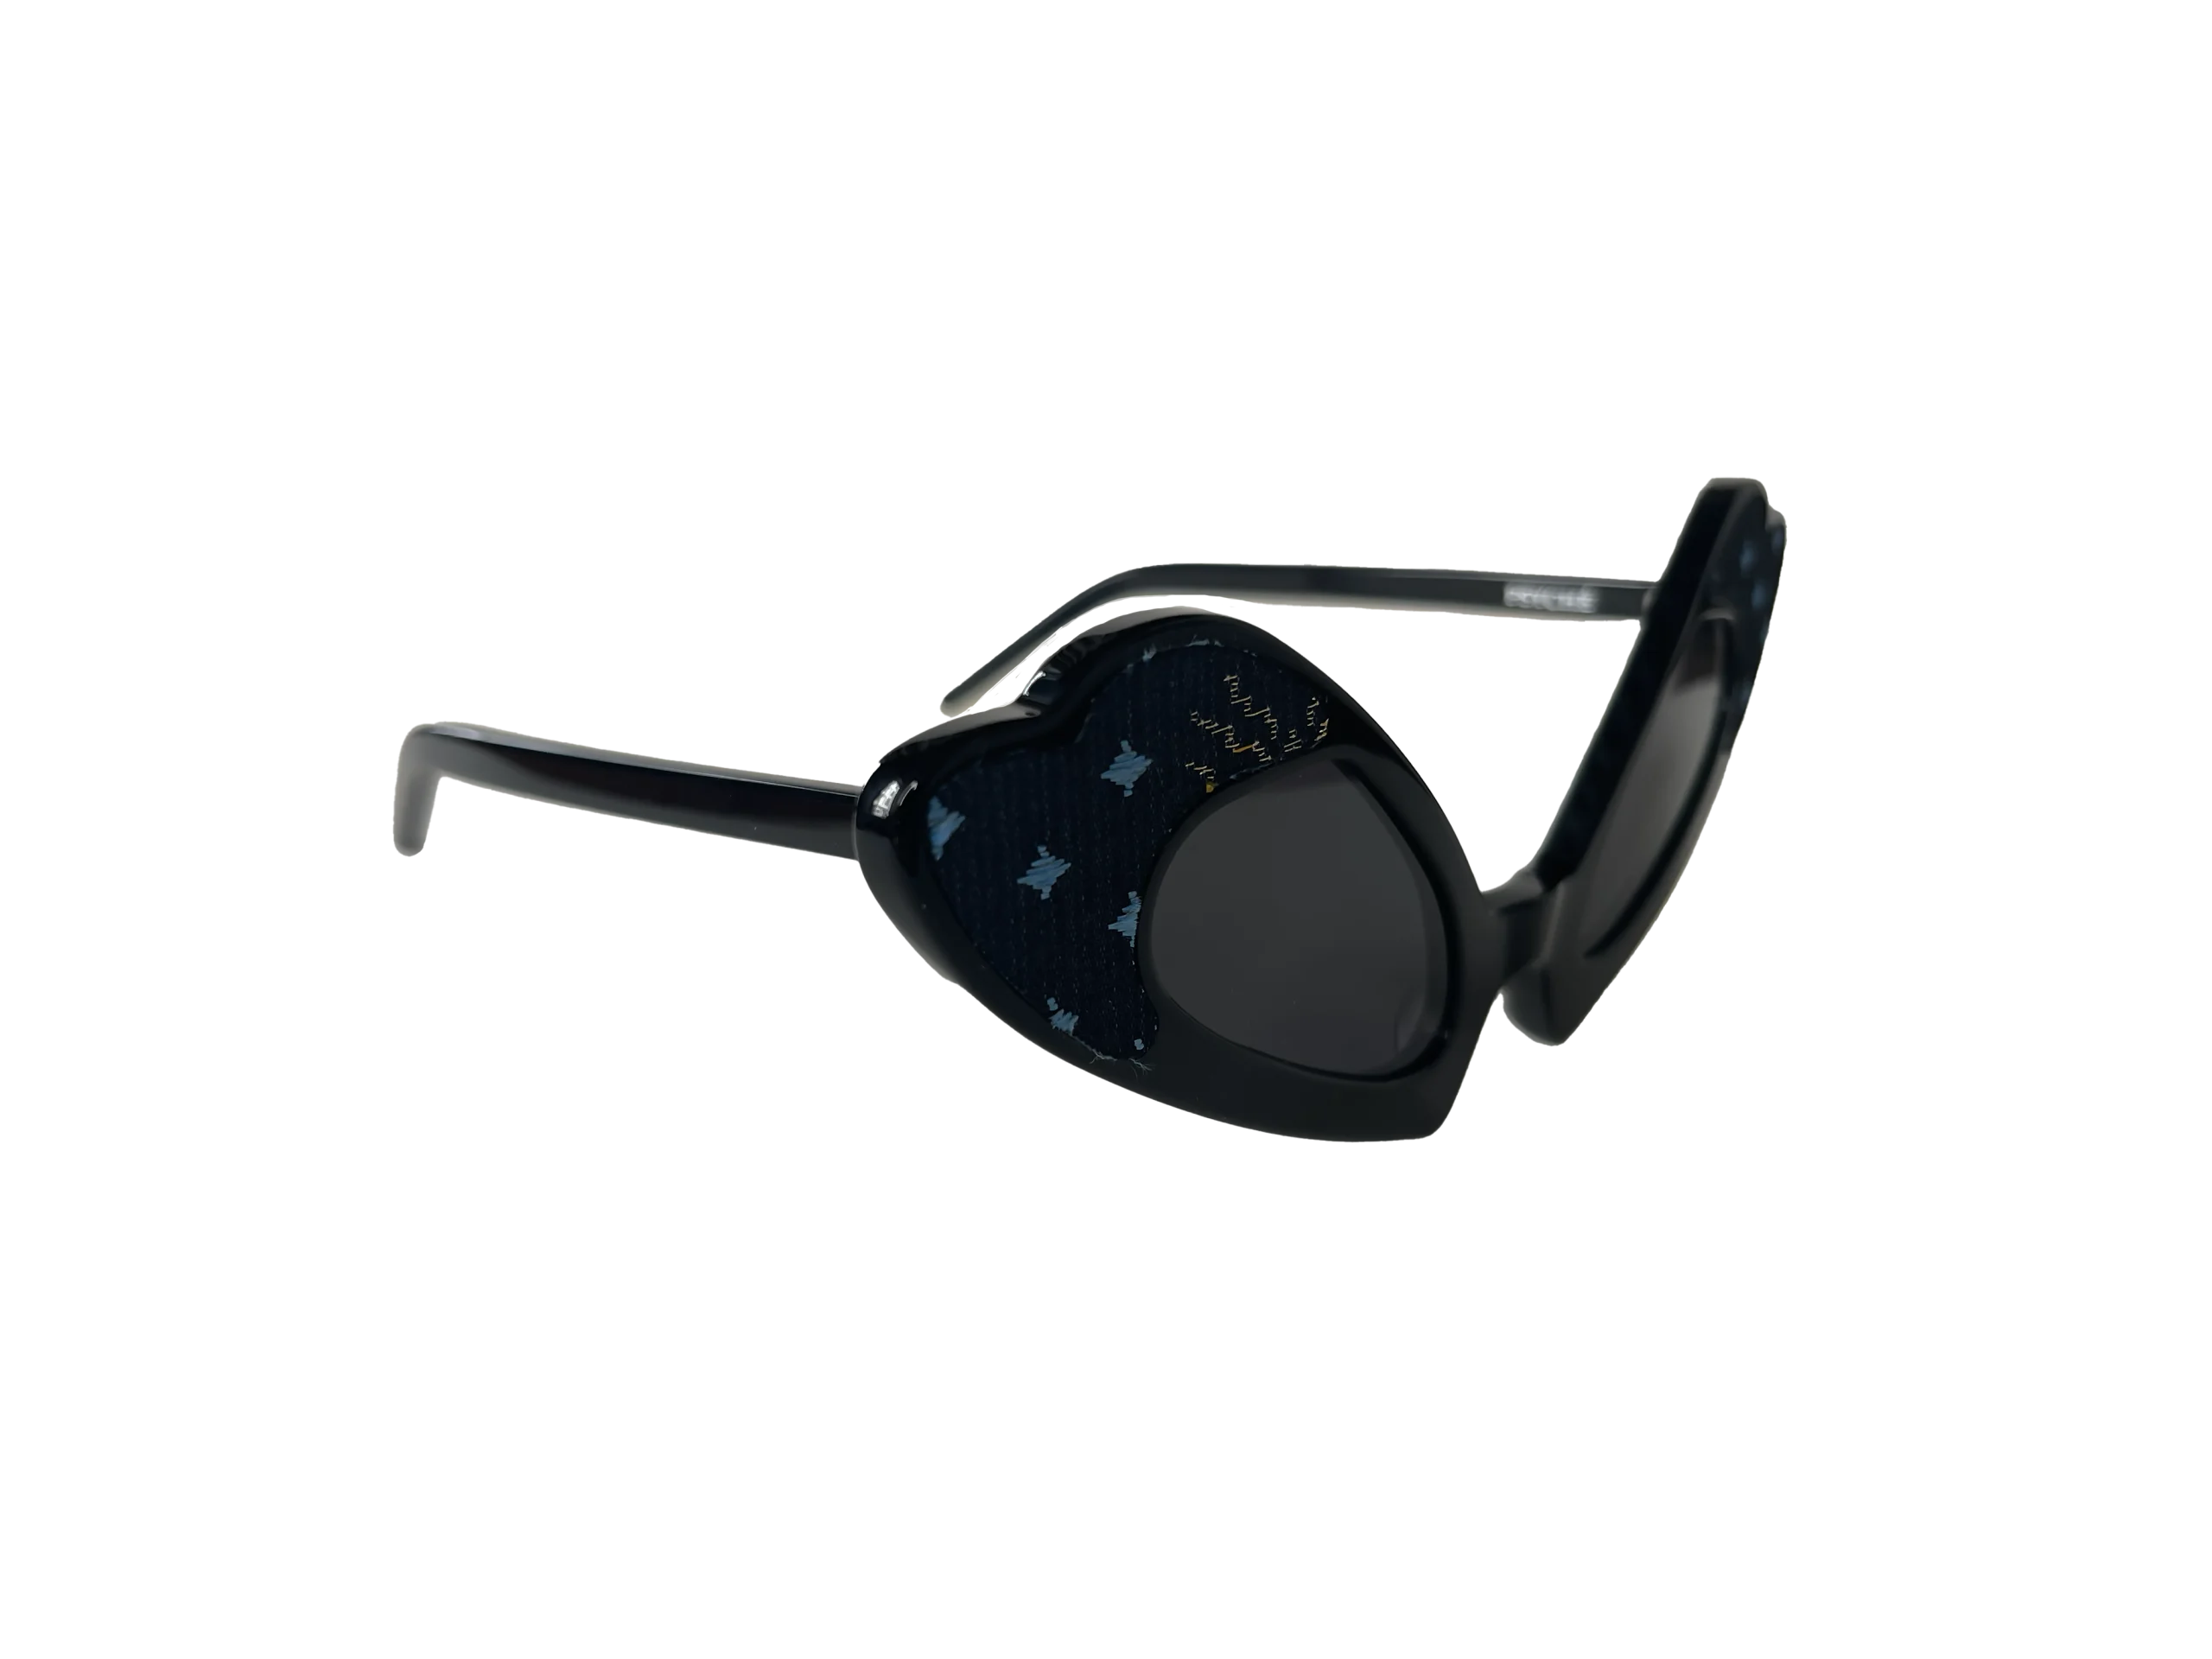 sunglasses psiche noir silk velvet black brocade rClarissa Oliverio